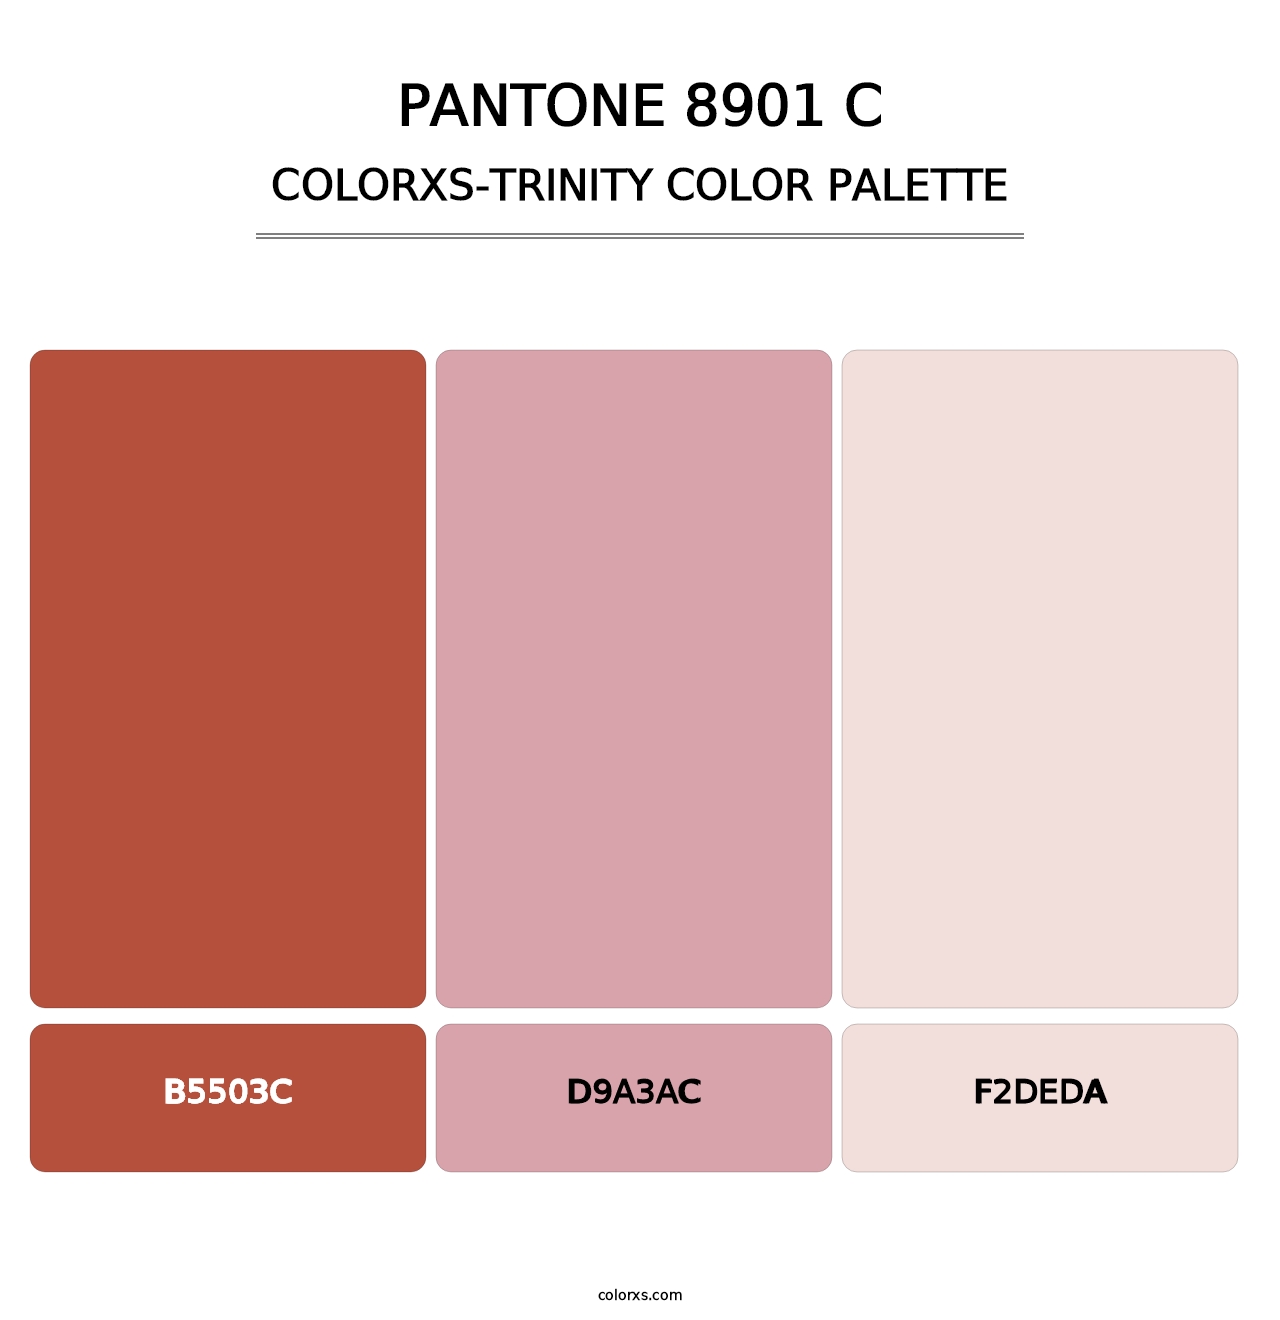 PANTONE 8901 C - Colorxs Trinity Palette